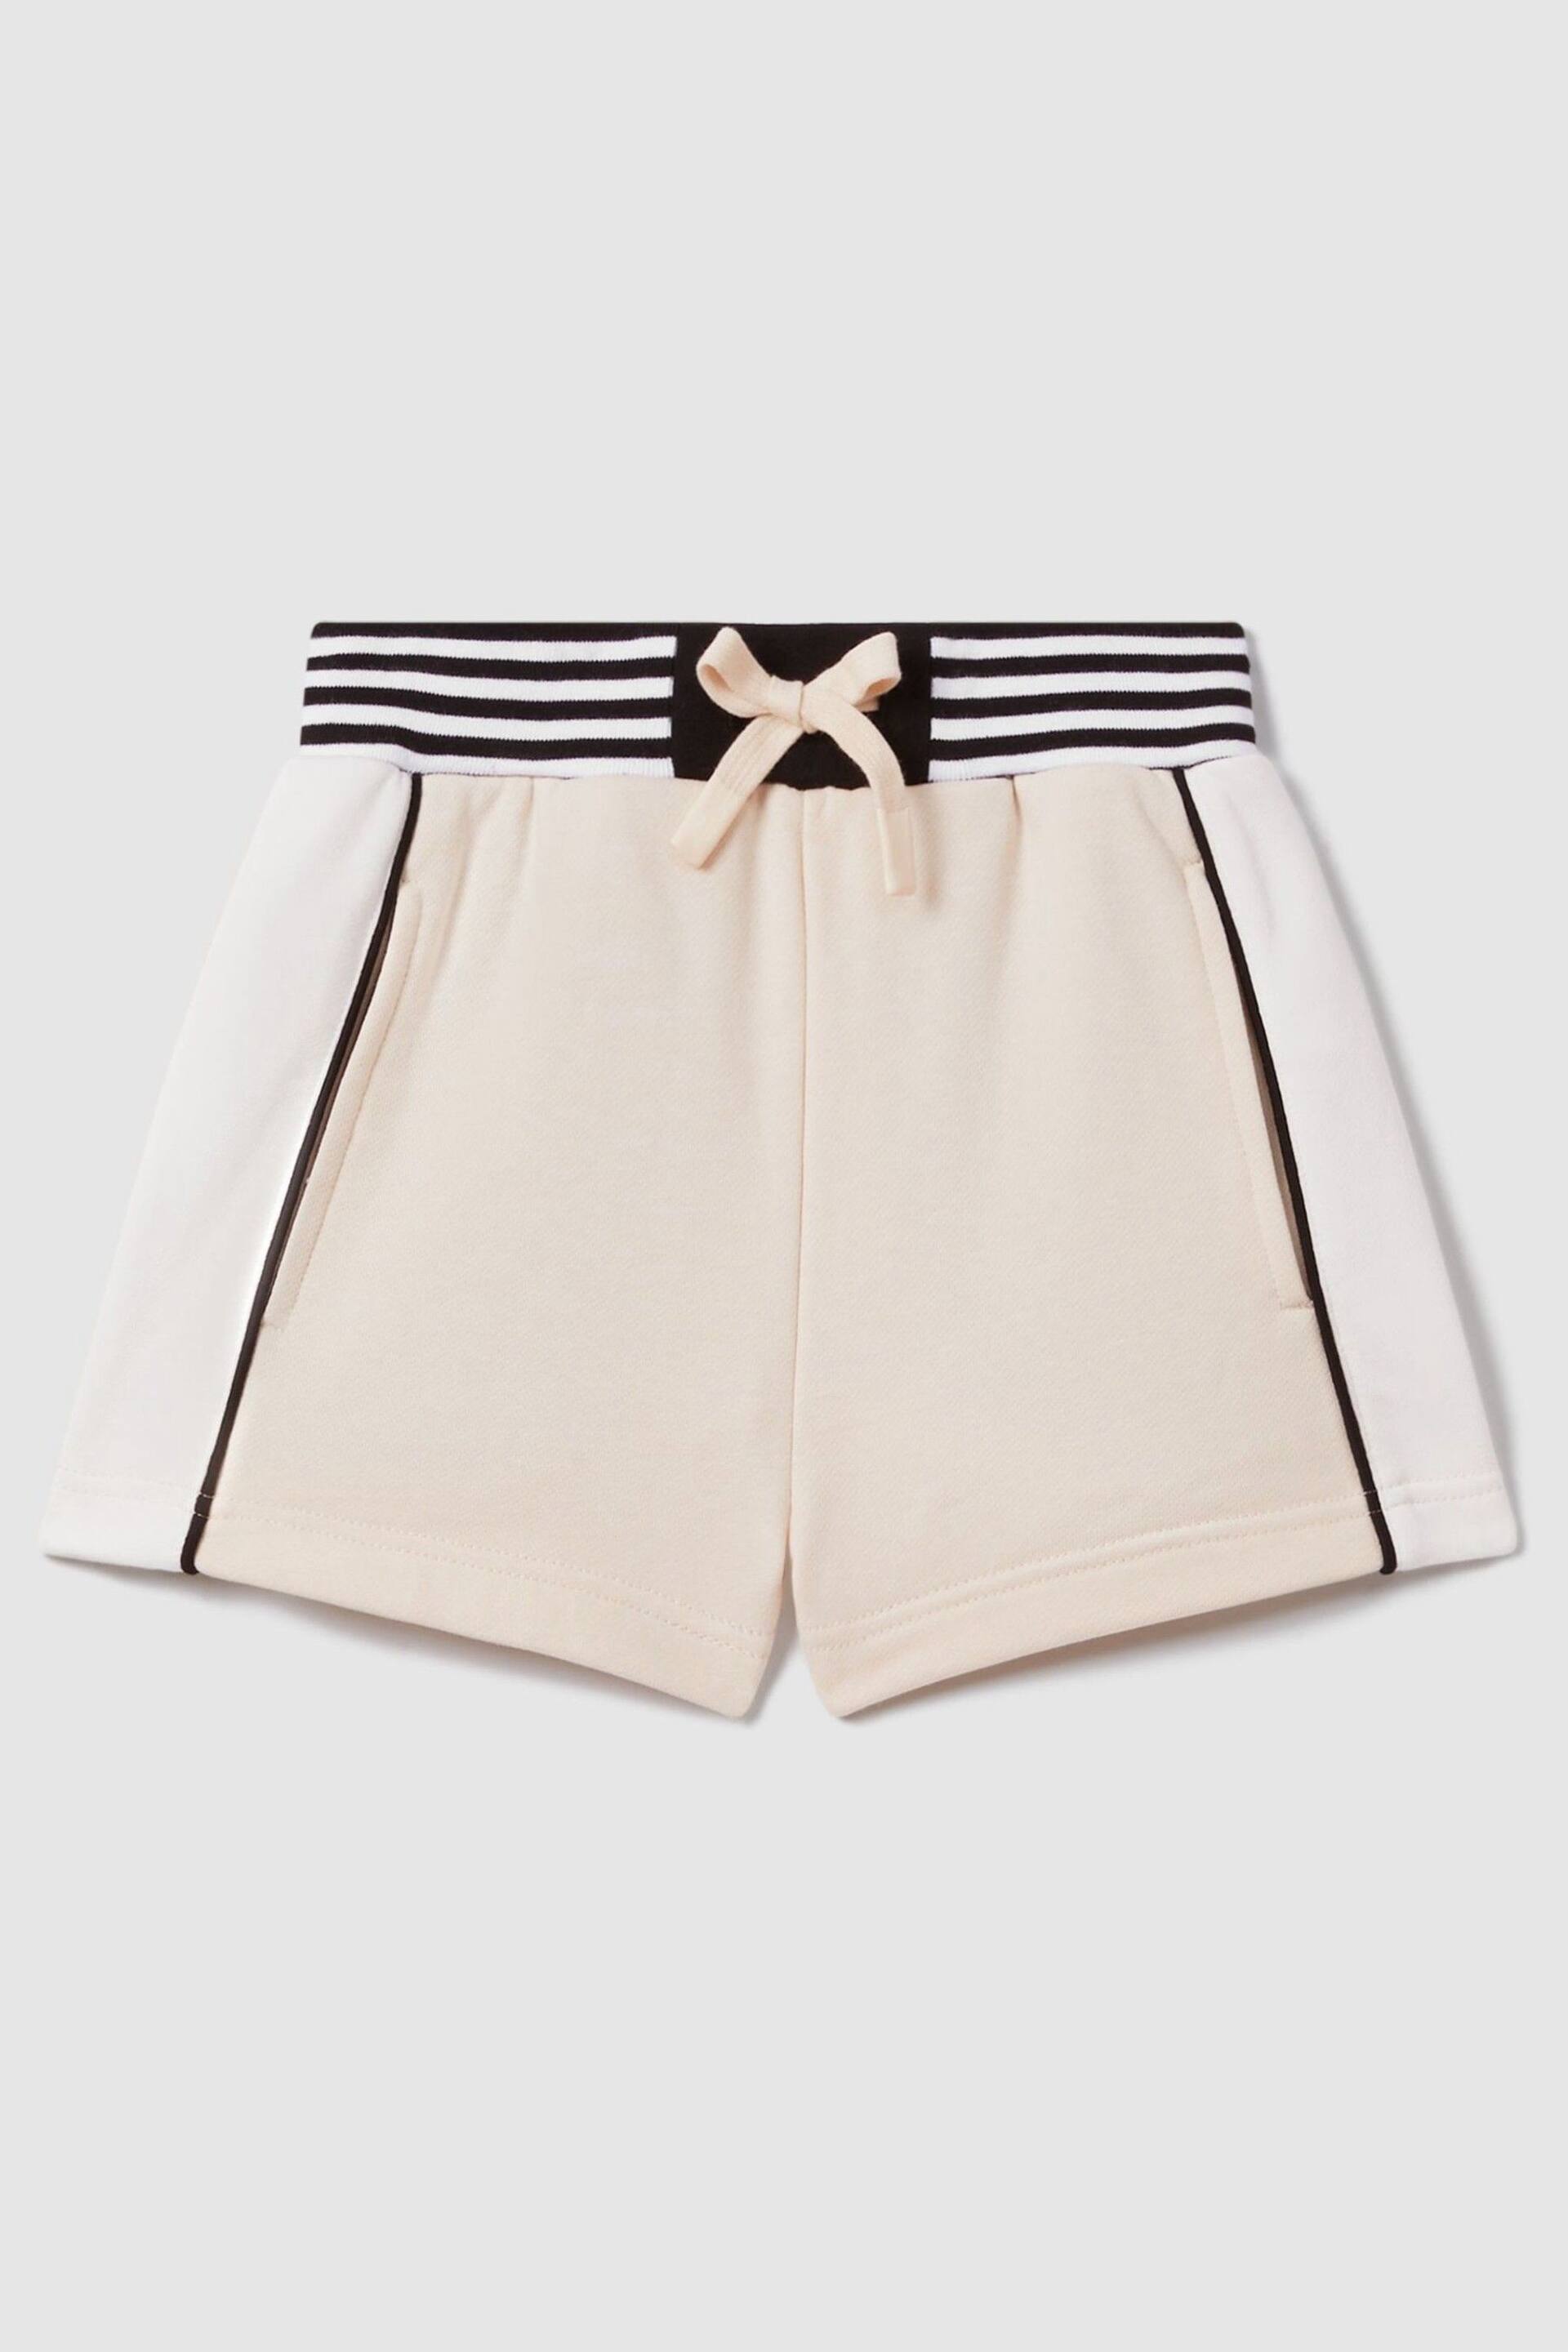 Reiss Ivory Colette Junior Cotton Blend Elasticated Waist Shorts - Image 2 of 4